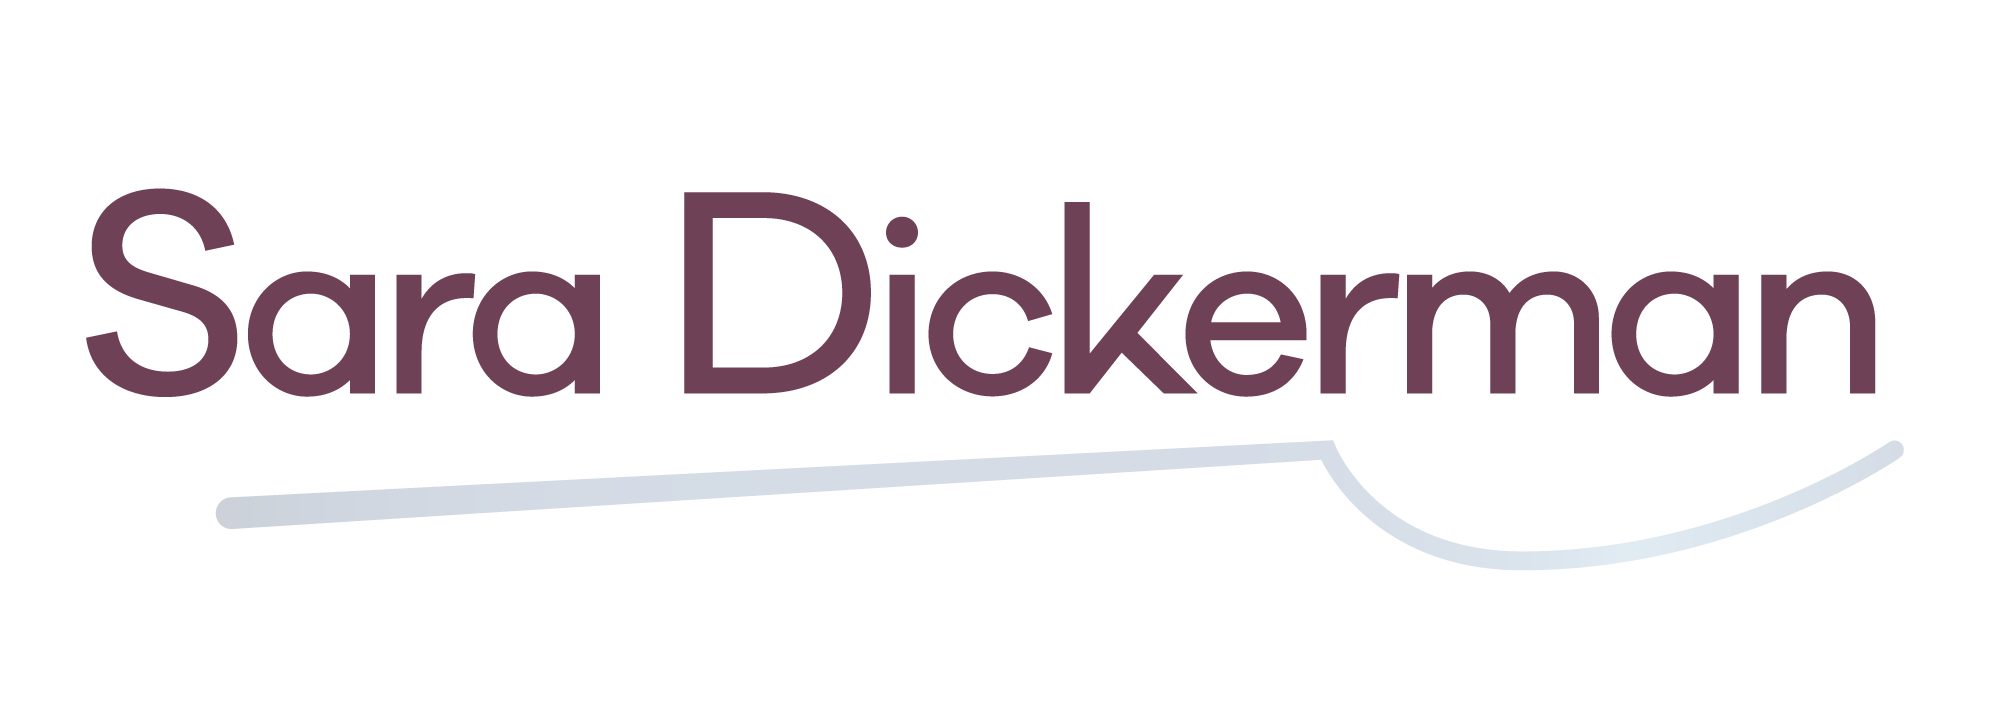 Sara Dickerman logo